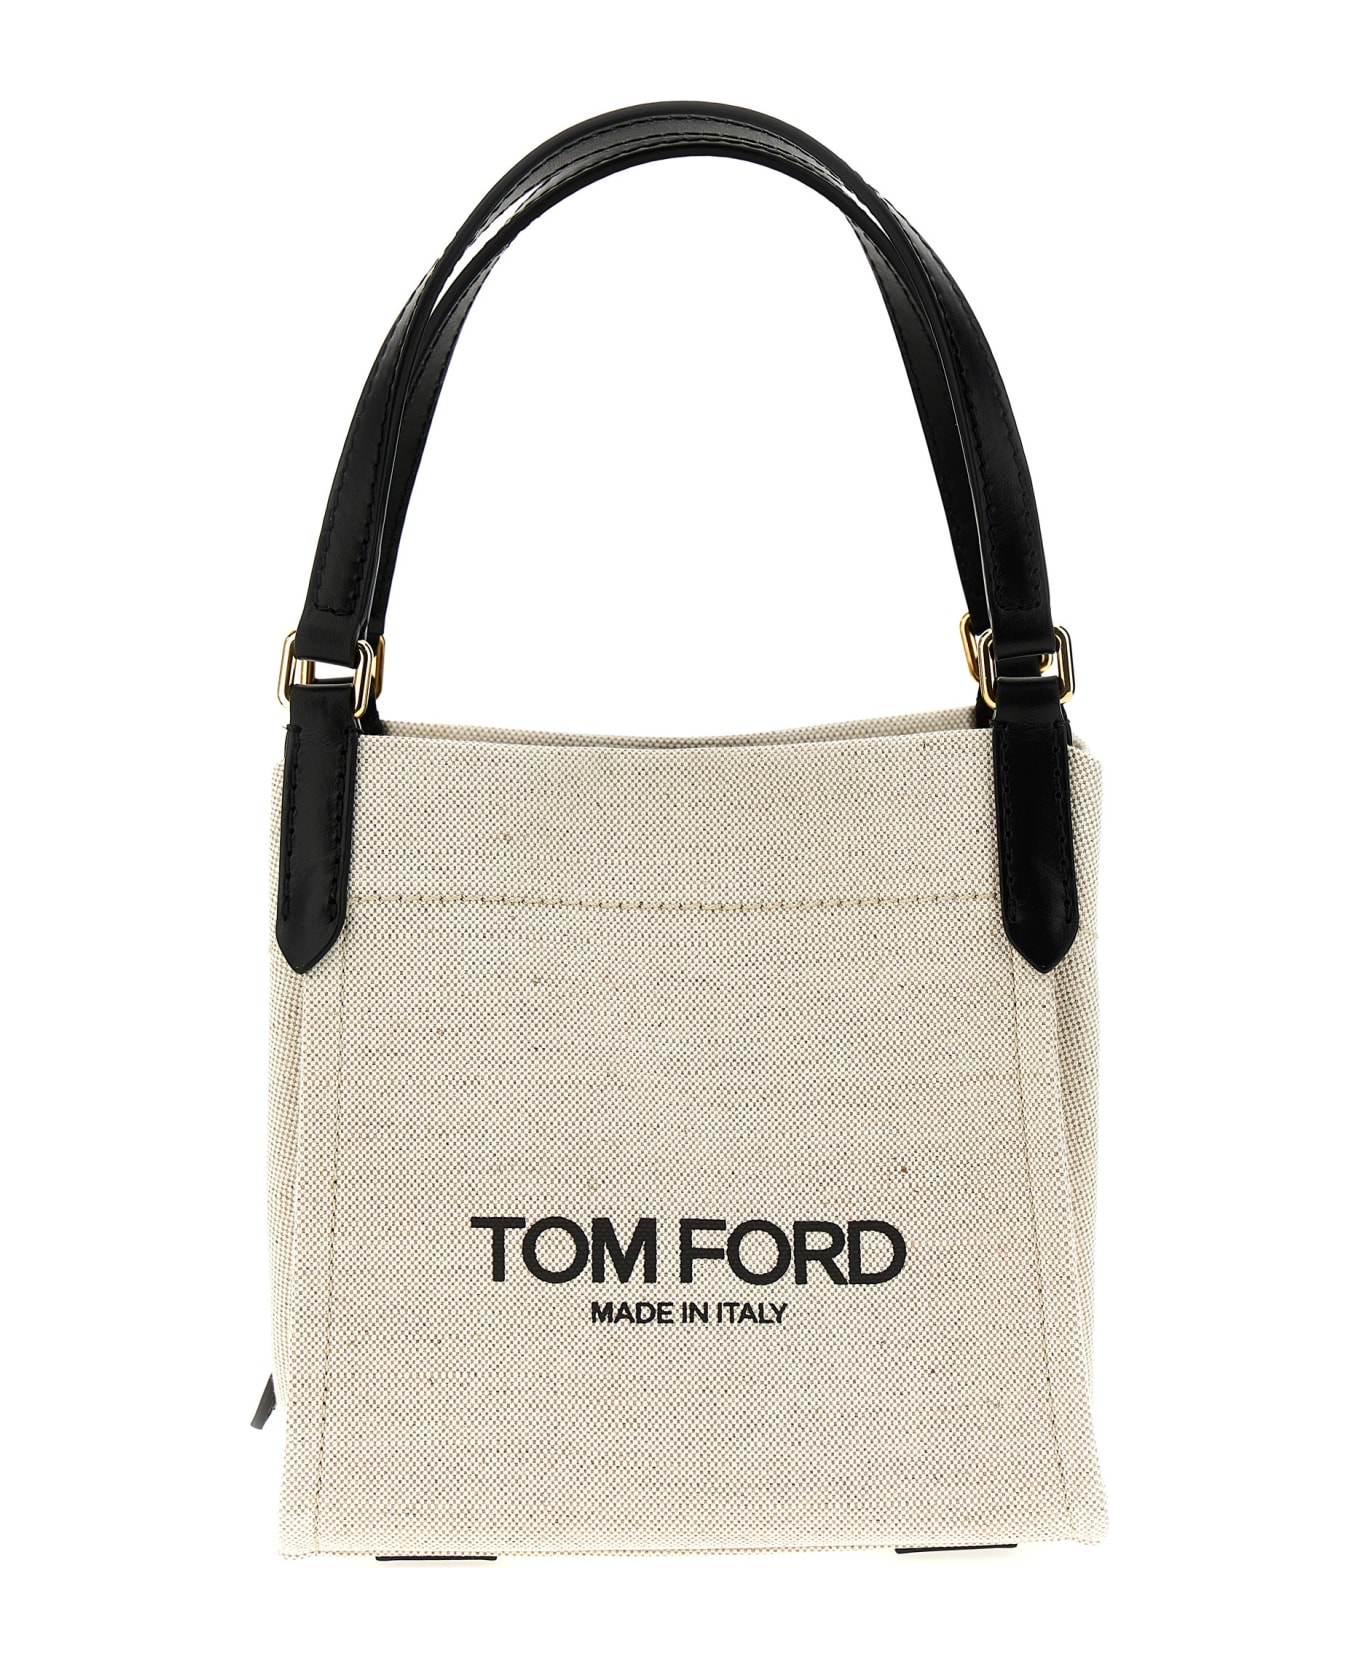 Tom Ford Logo Canvas Handbag - NEUTRALS/BLACK